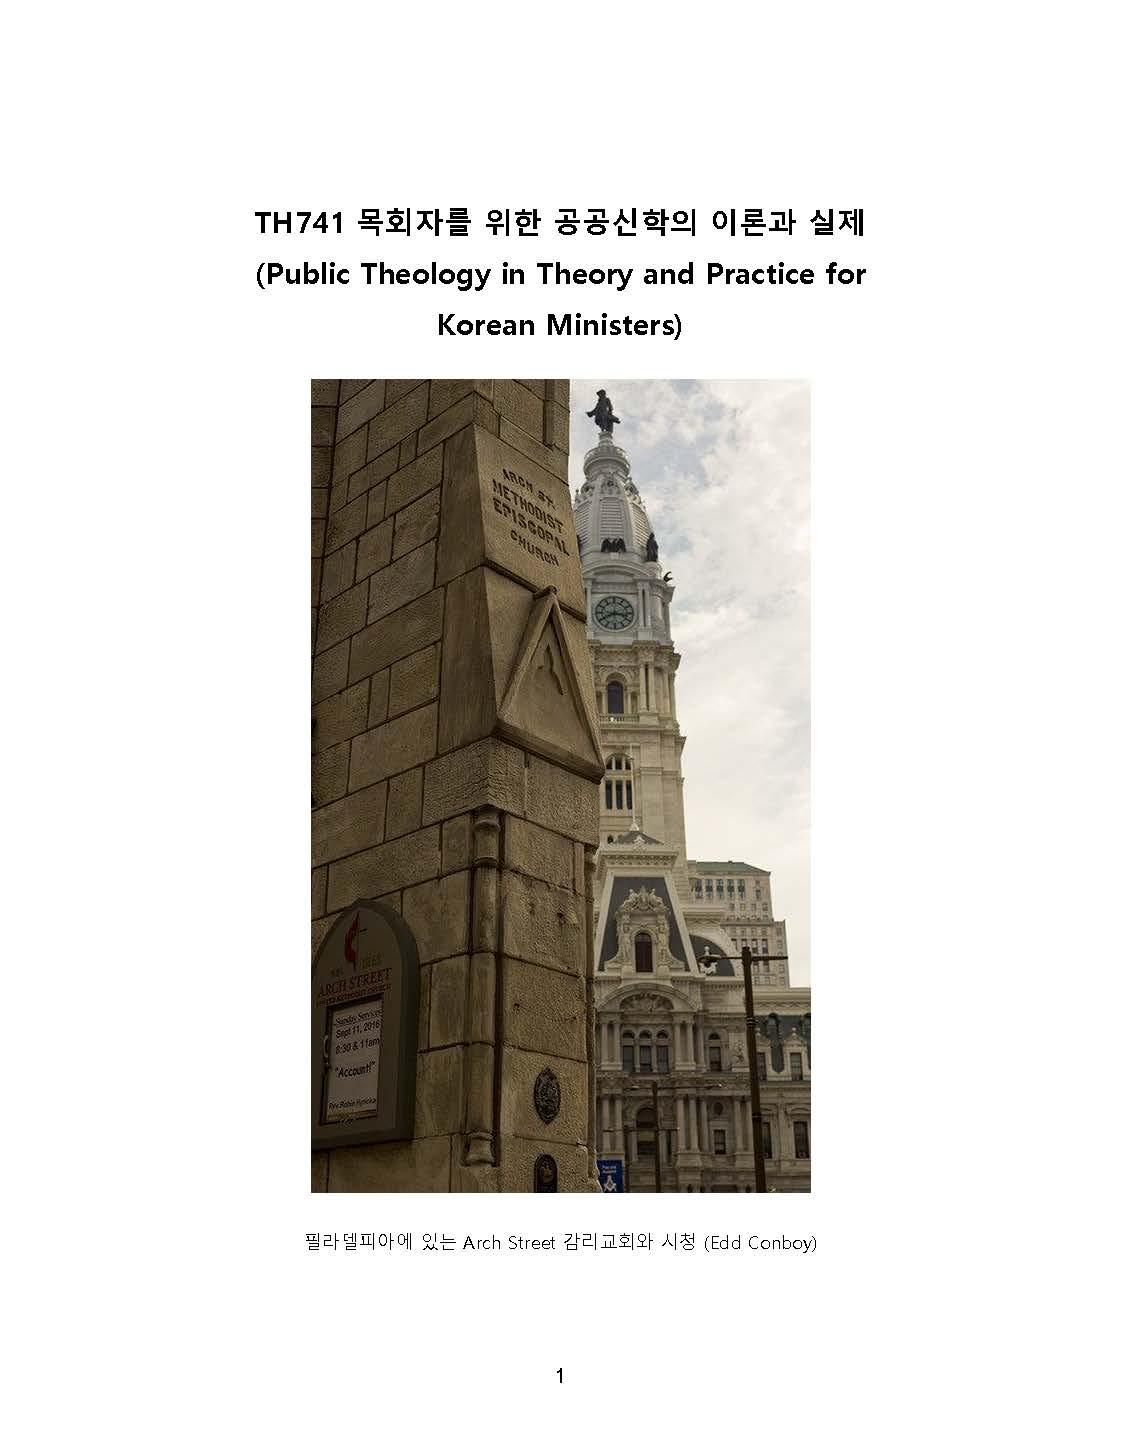 TH741 Public Theology - Korean - syllabus (1)_Page_01.jpg